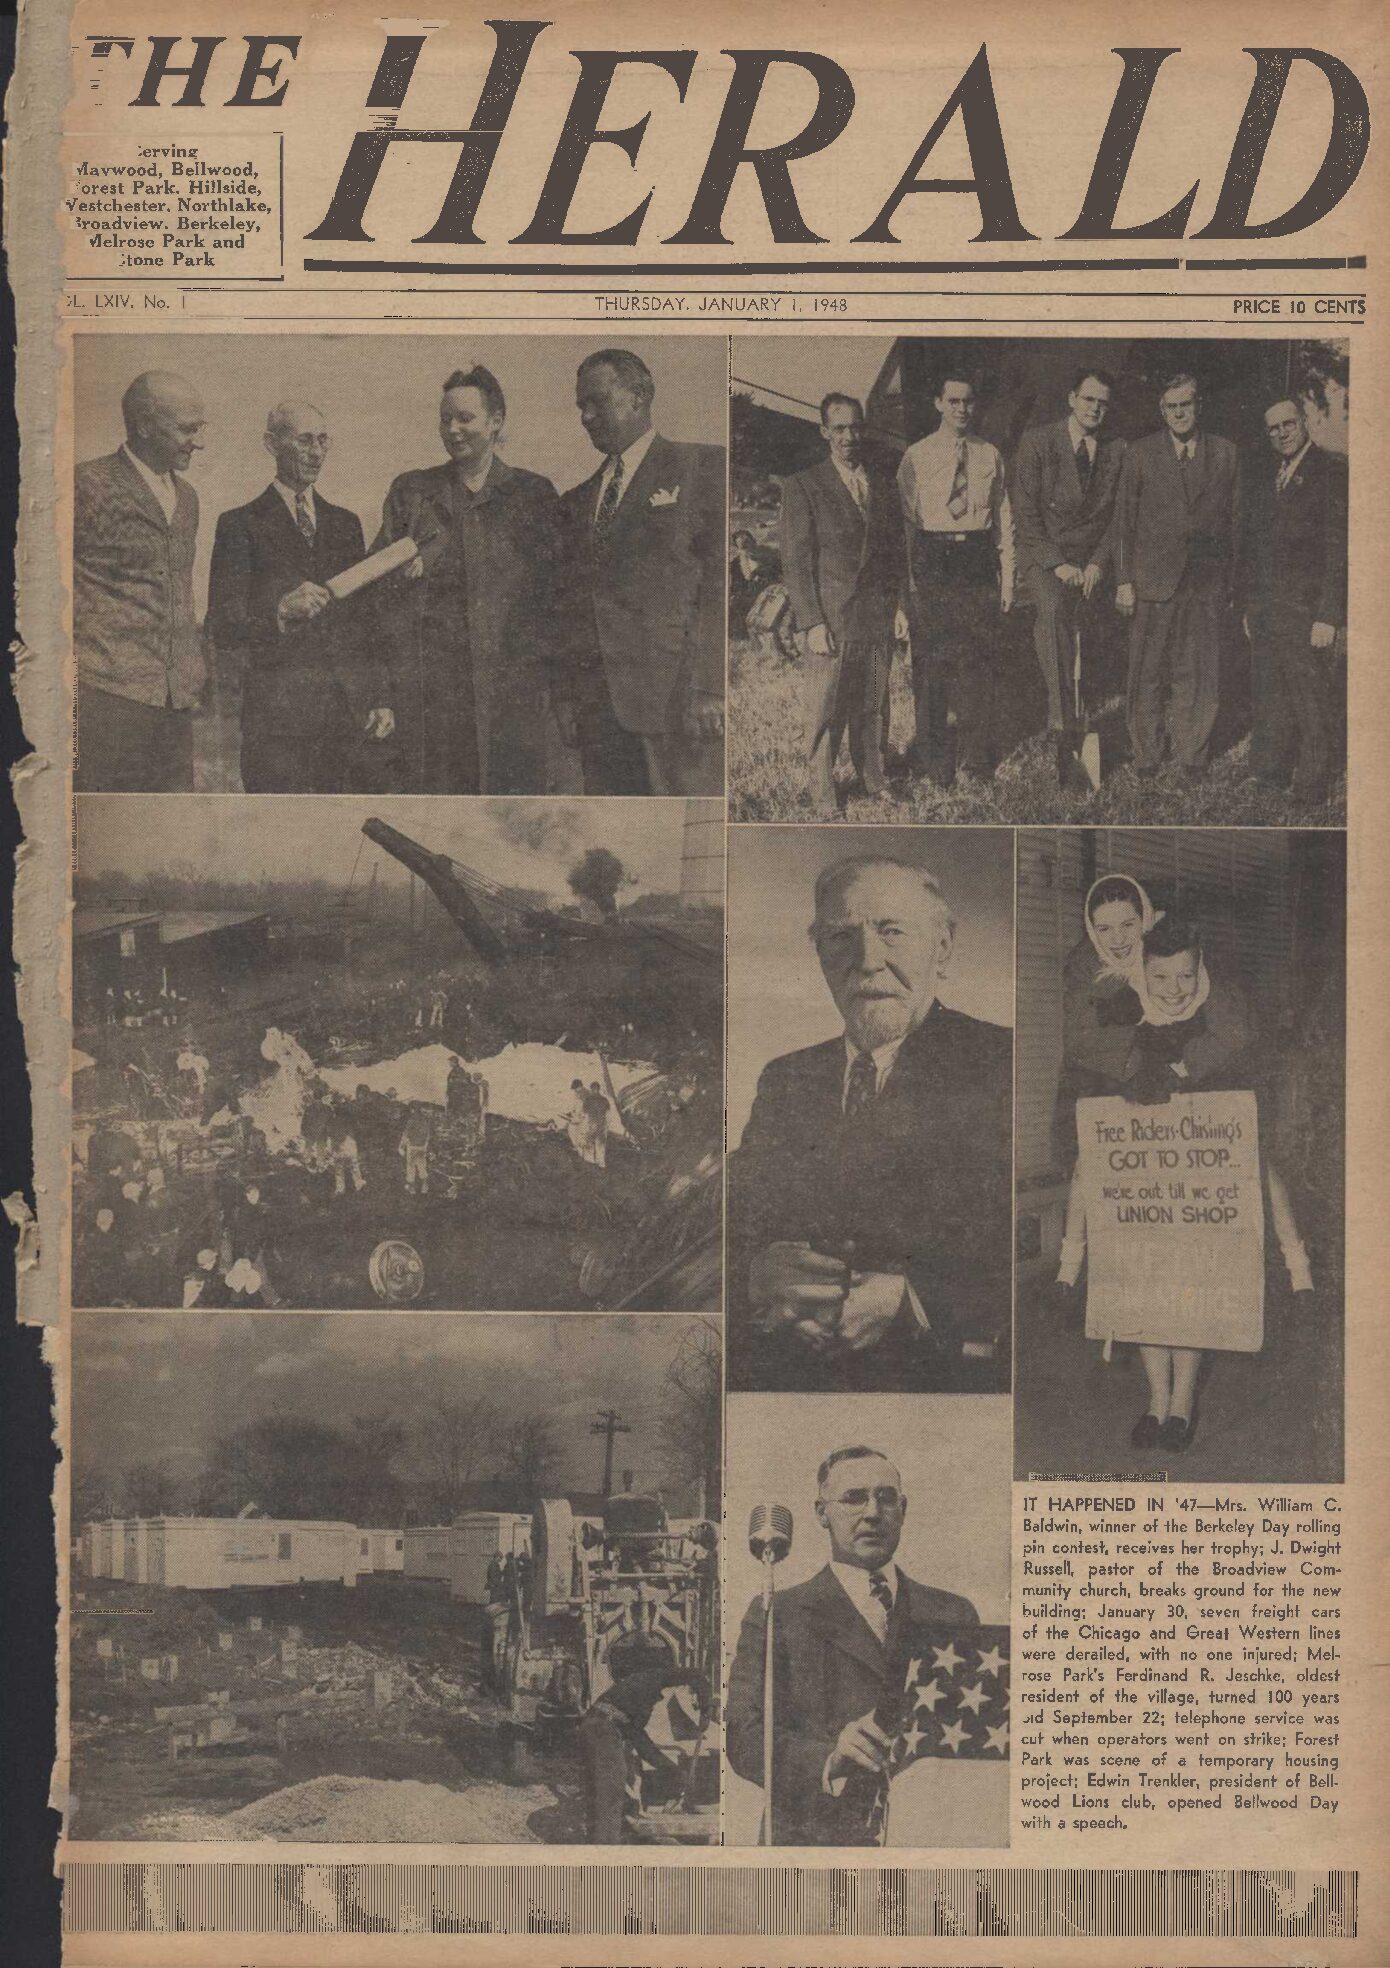 The Herald – 19480101